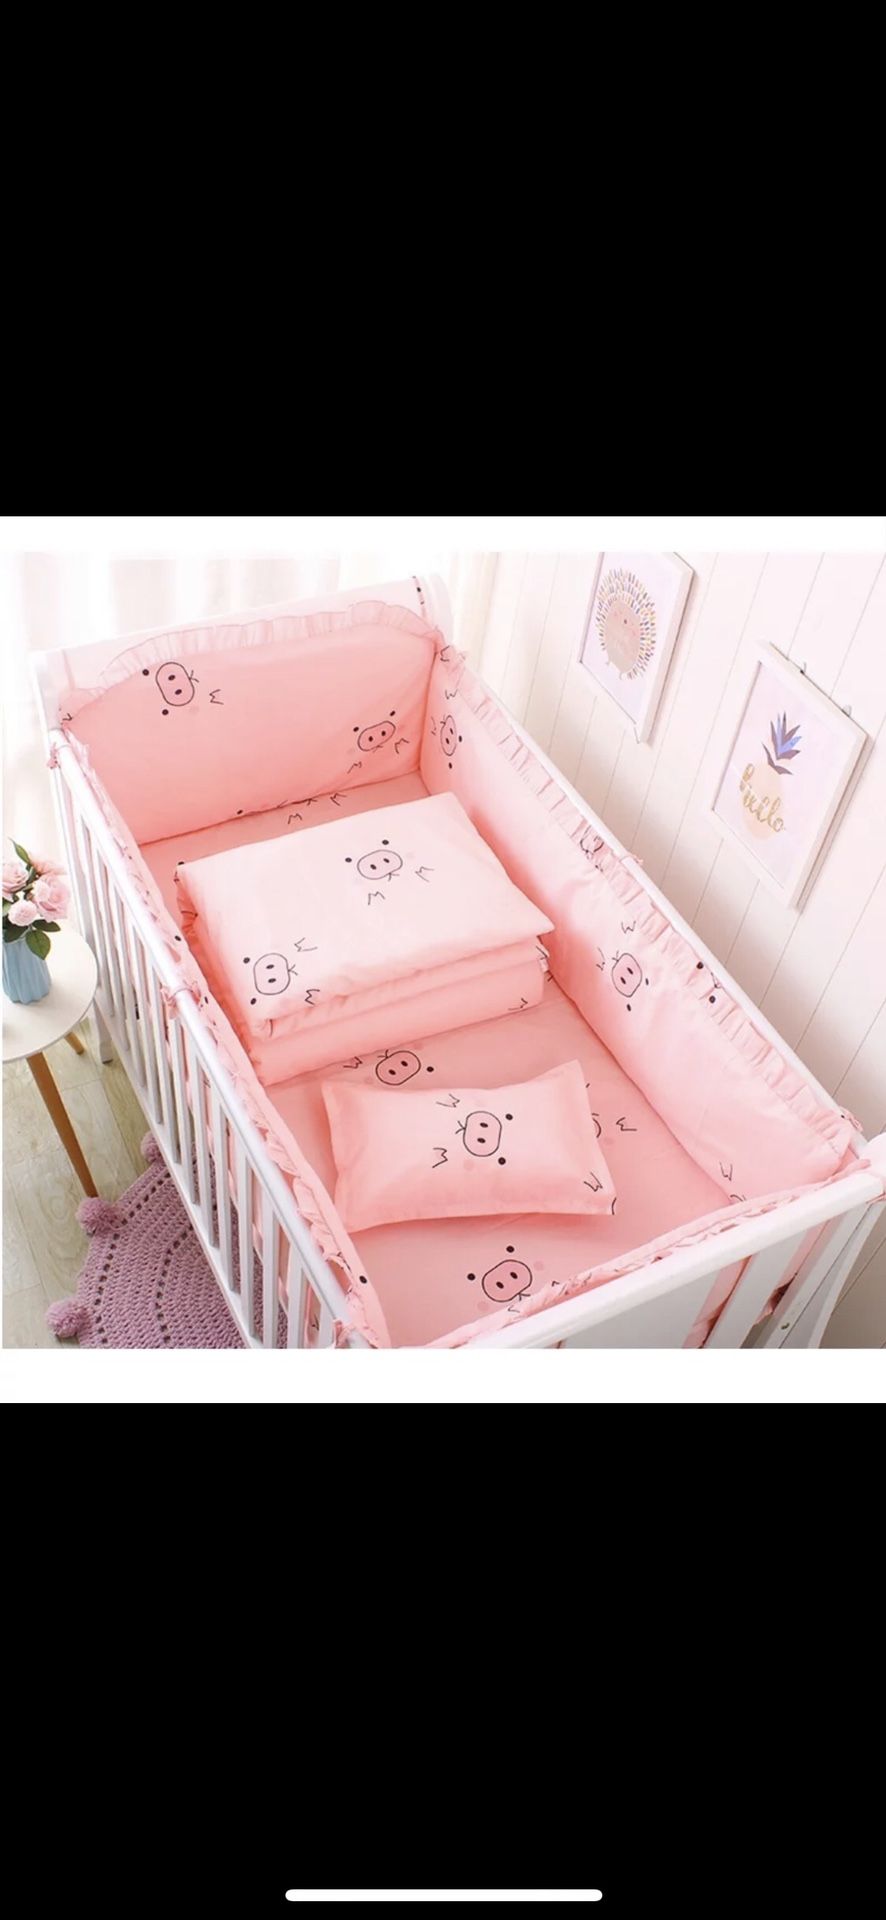 Baby Girl Crib Decor